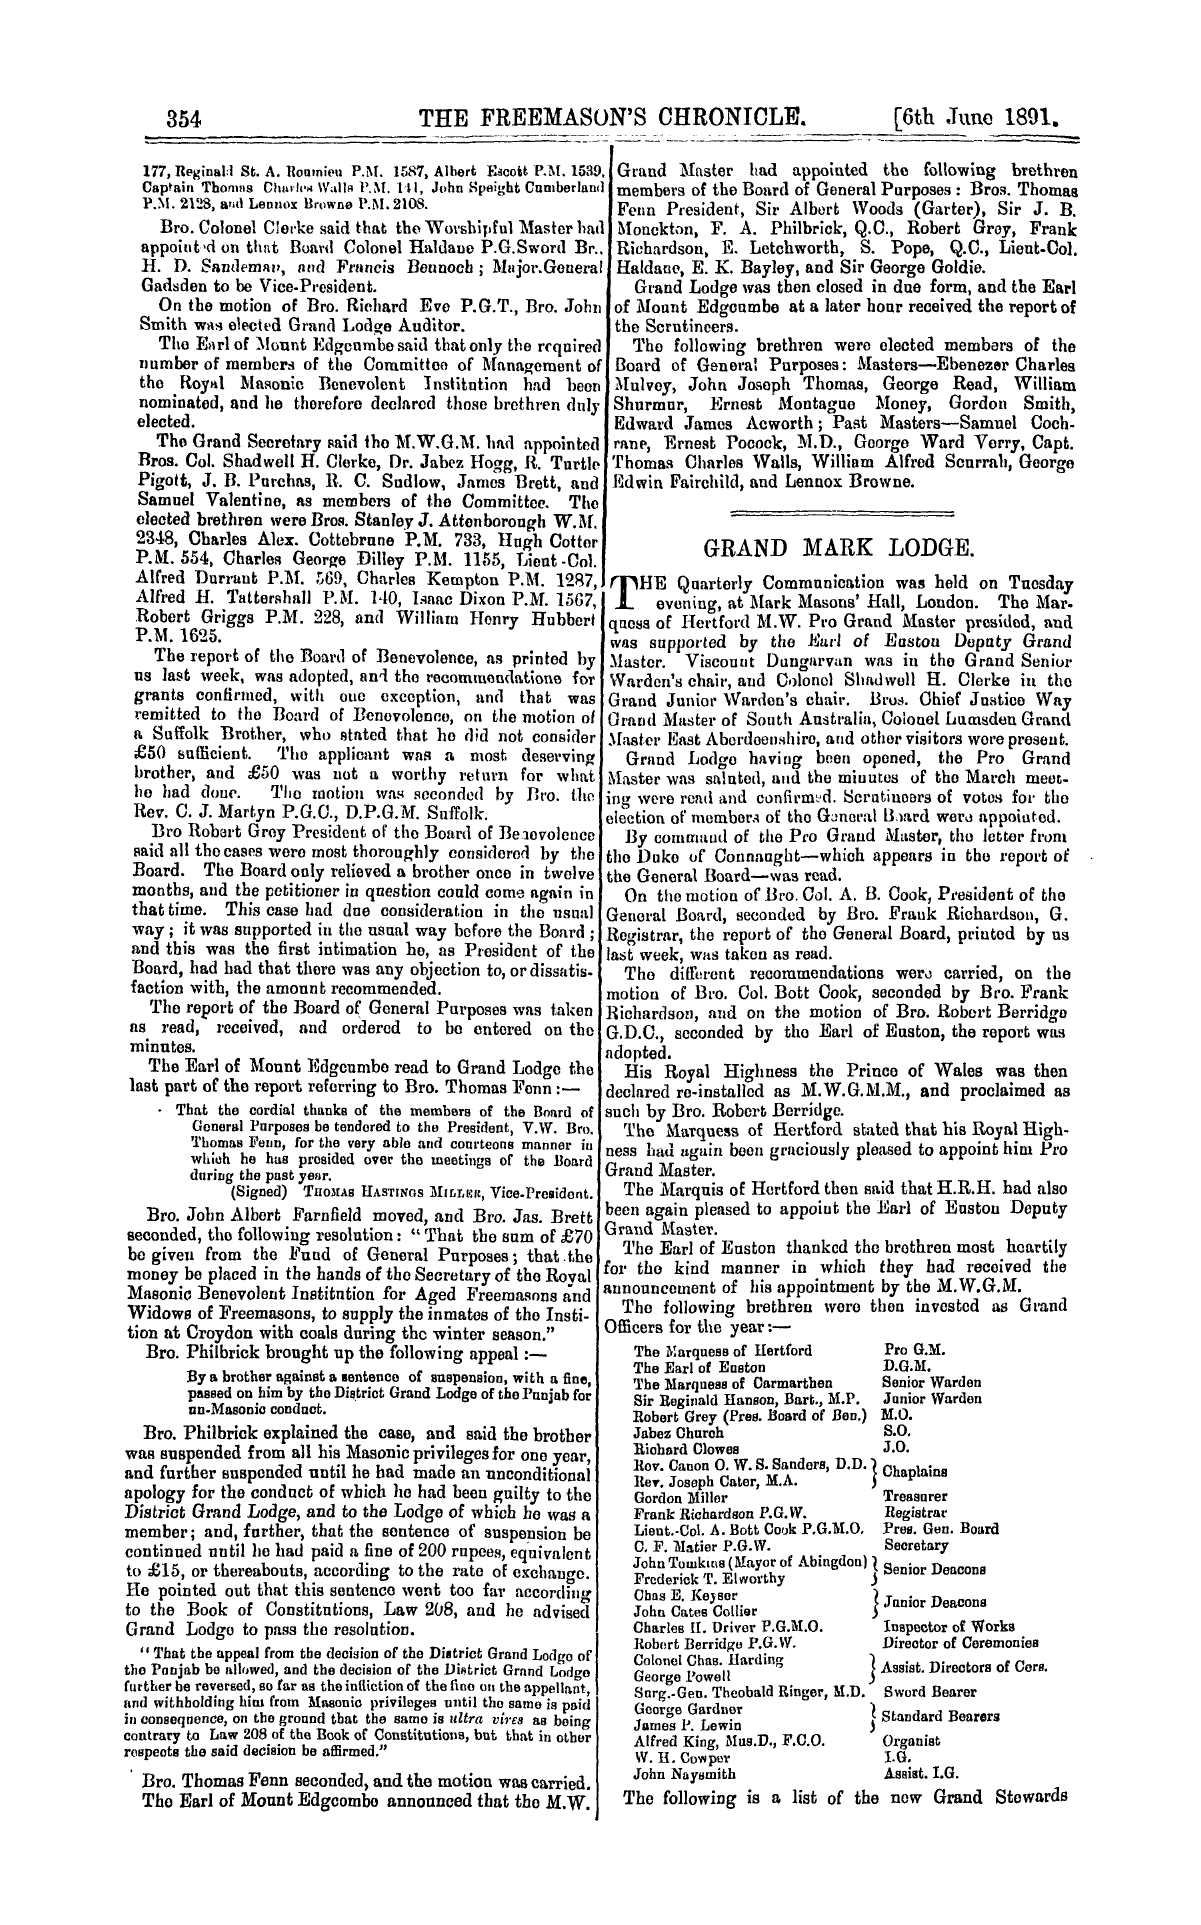 The Freemason's Chronicle: 1891-06-06 - Grand Mark Lodge.